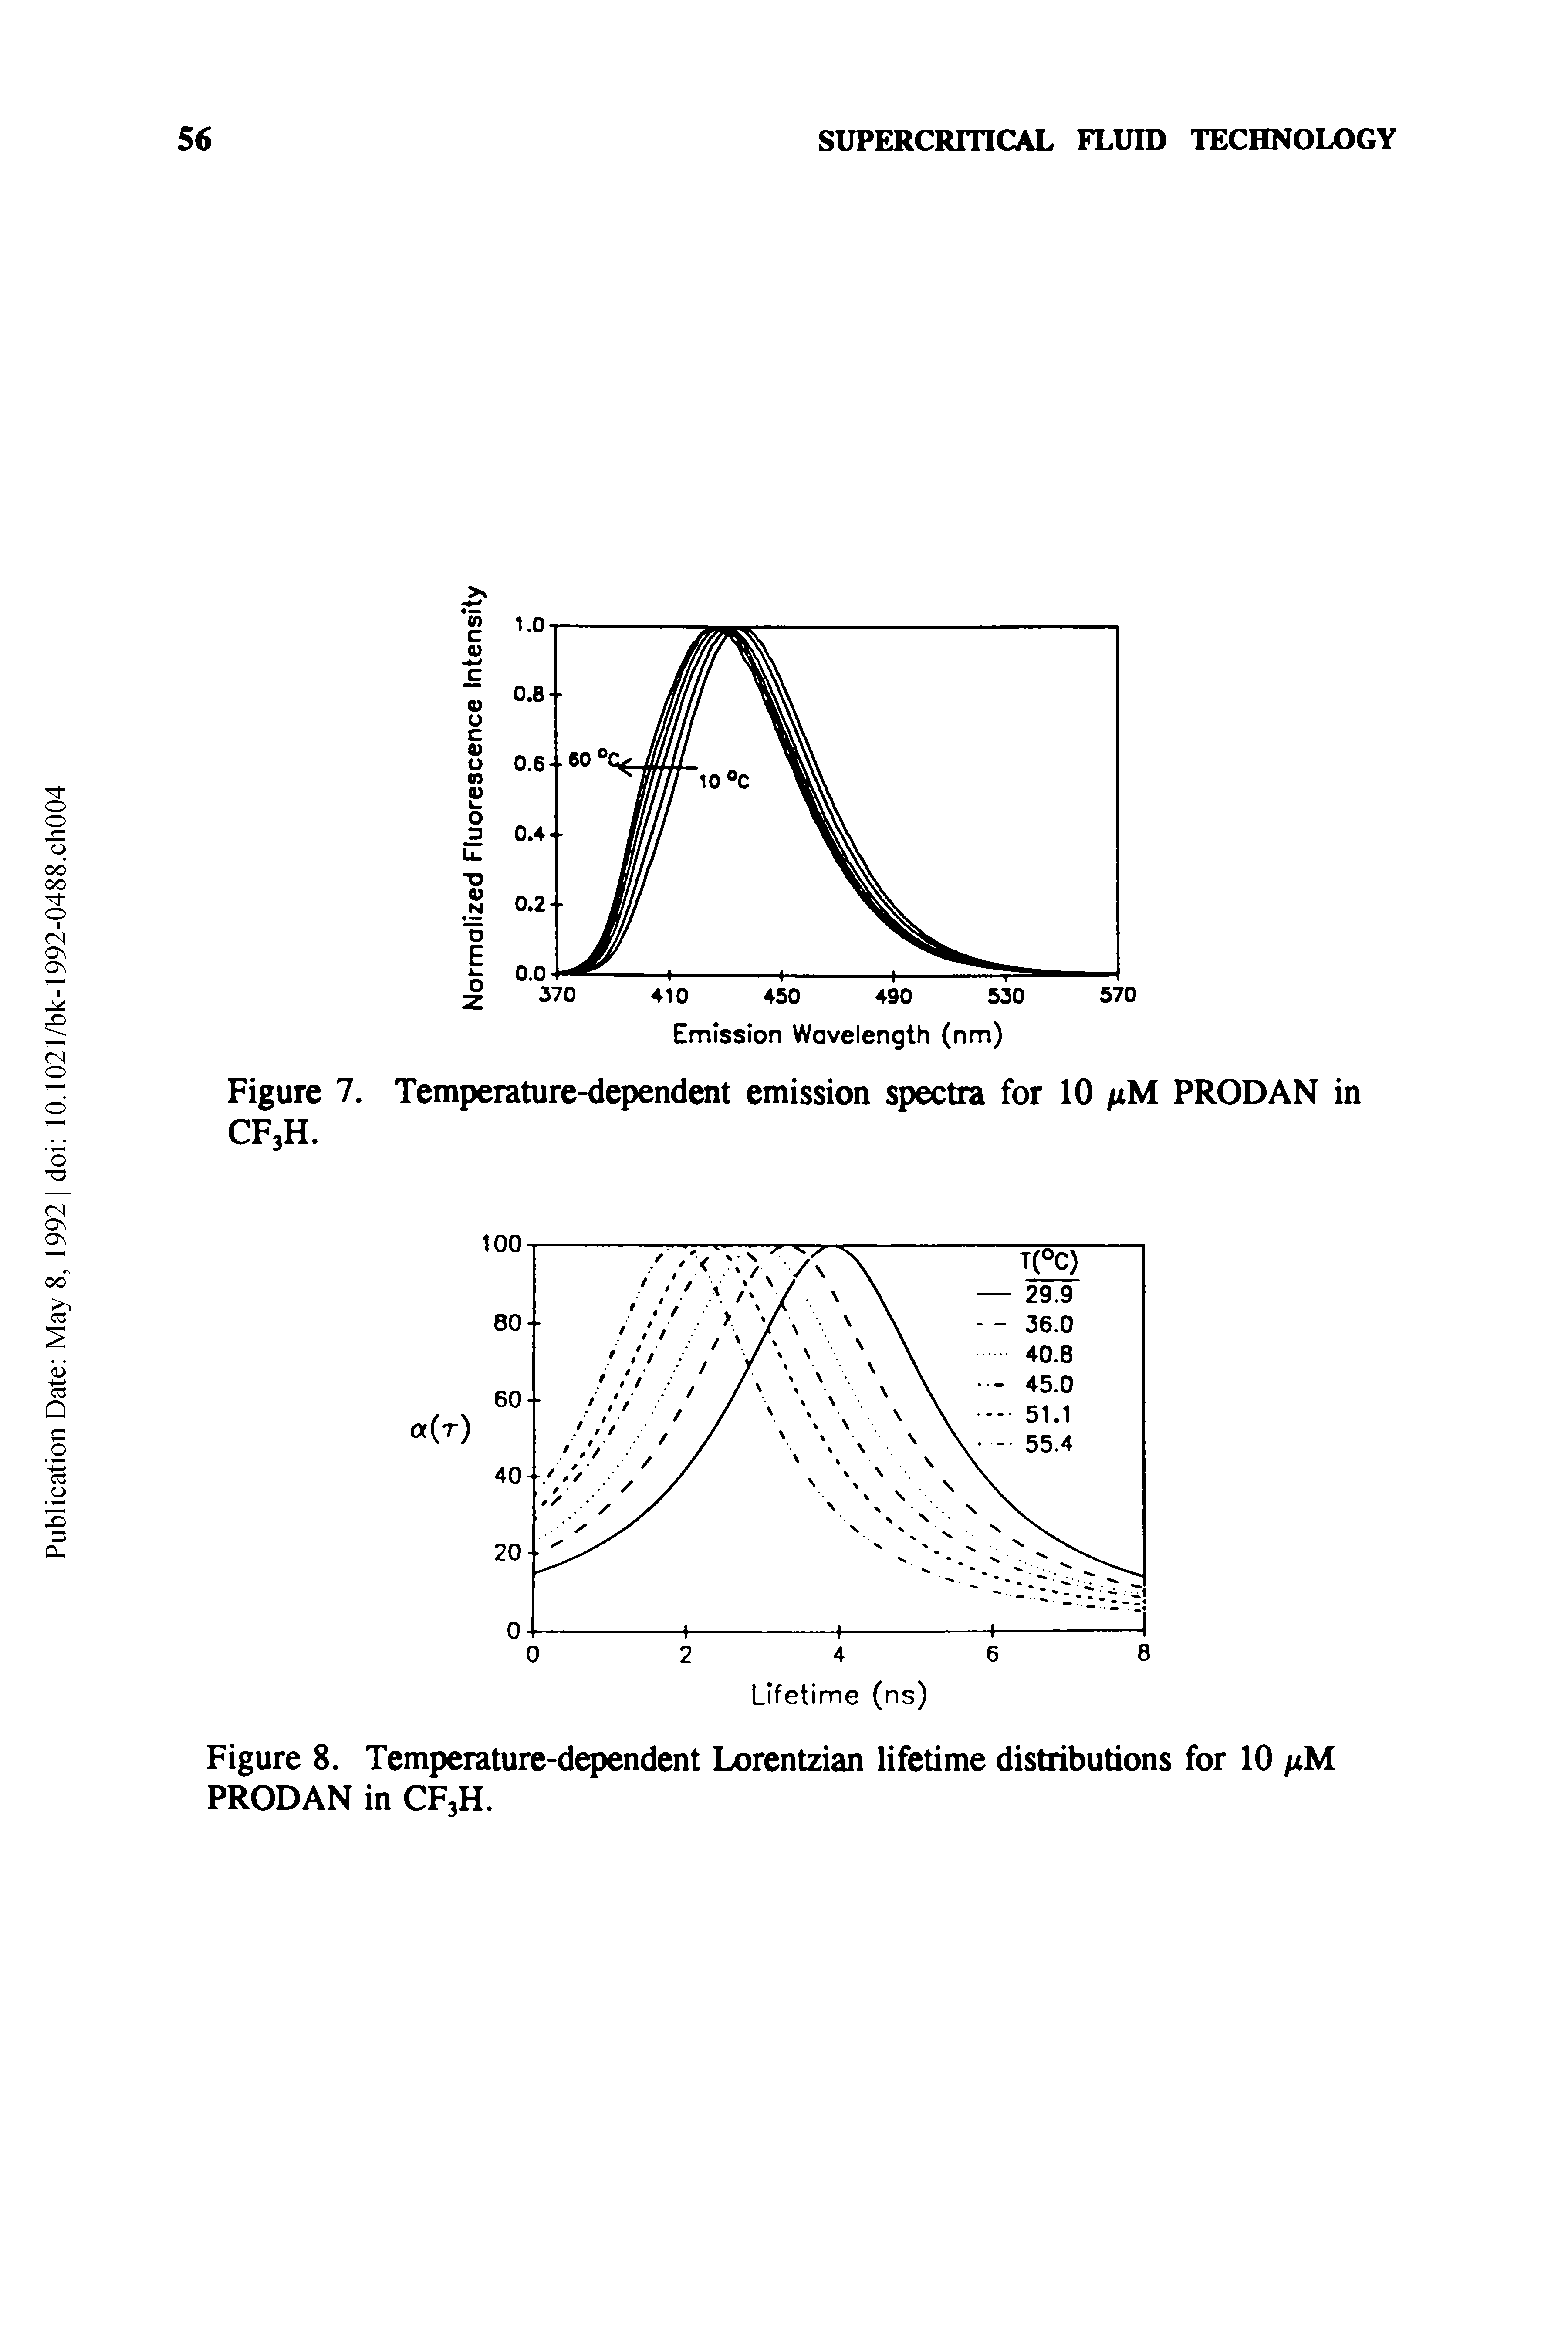 Figure 8. Temperature-dependent Lorentzian lifetime distributions for 10 /xM PRODAN in CF3H.